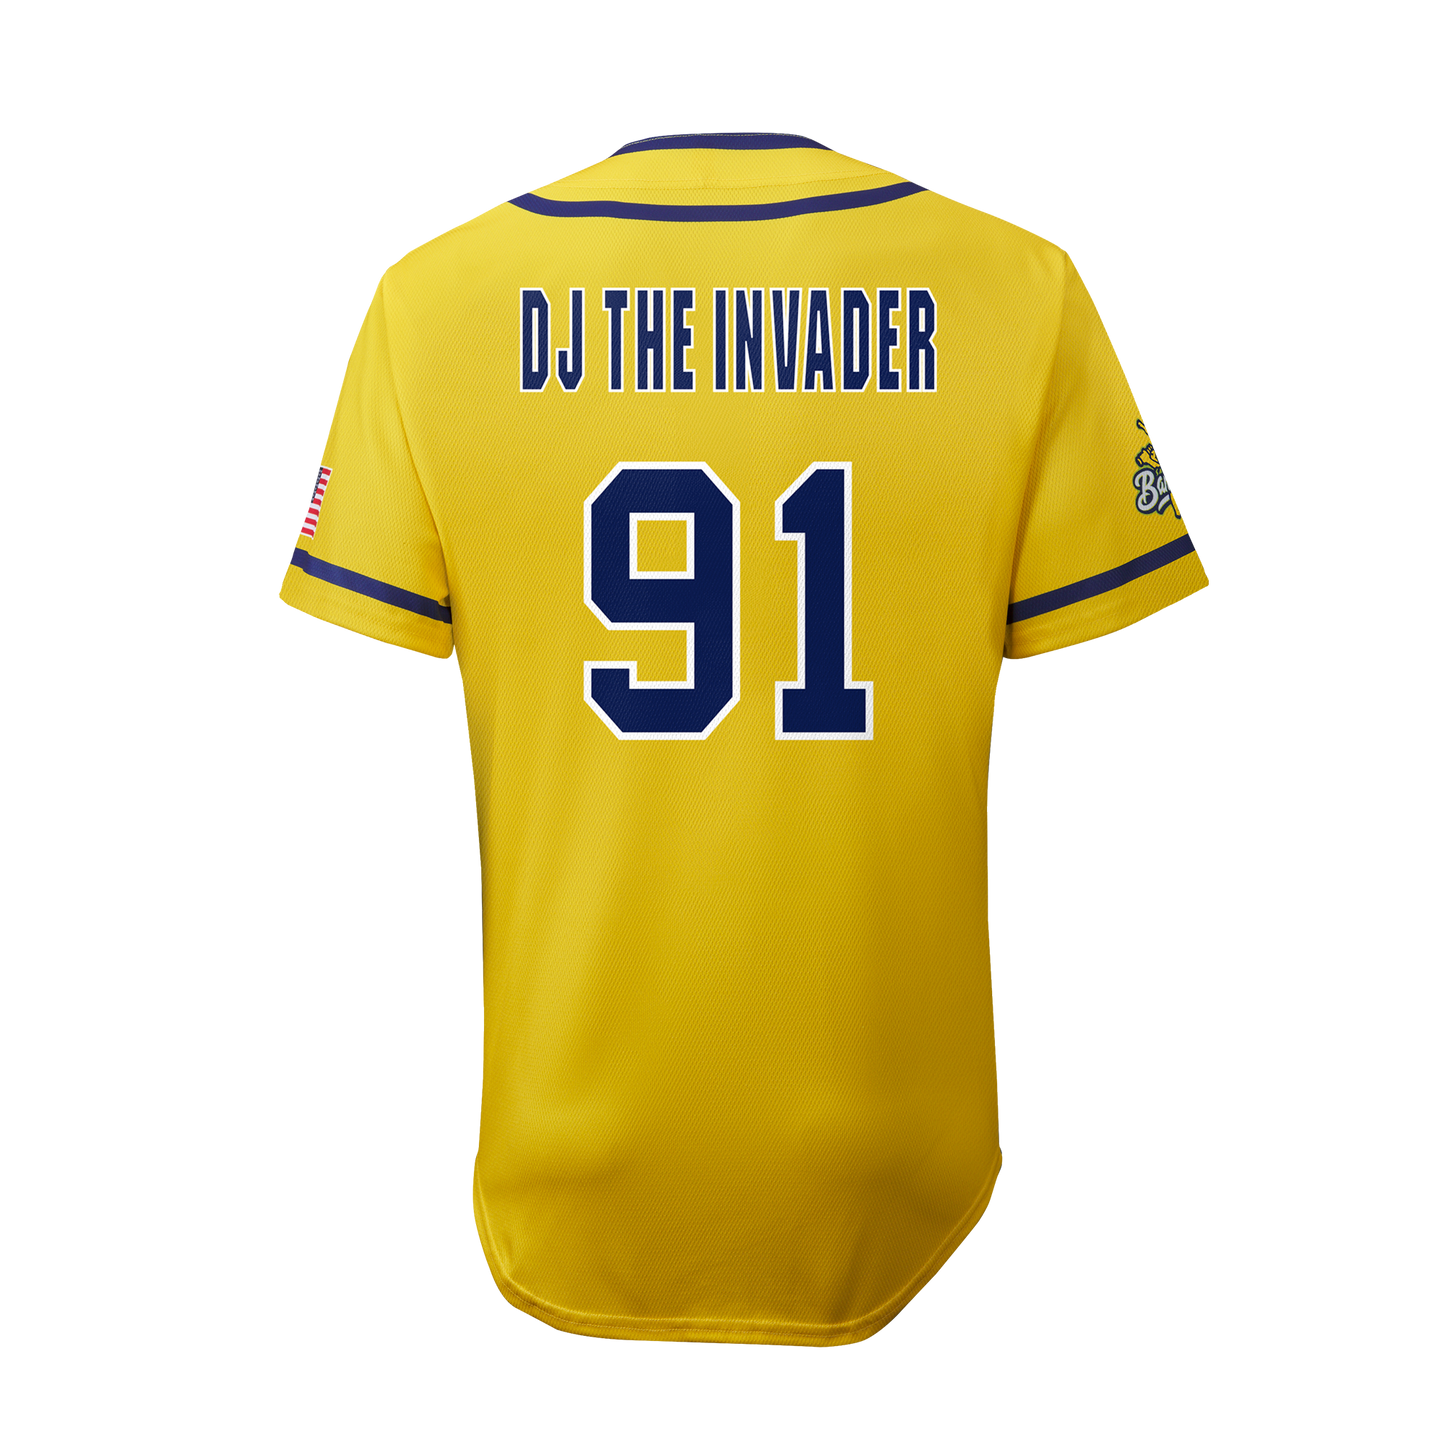 YOUTH Bananas DJ The Invader #91 EvoShield Jersey - Yellow